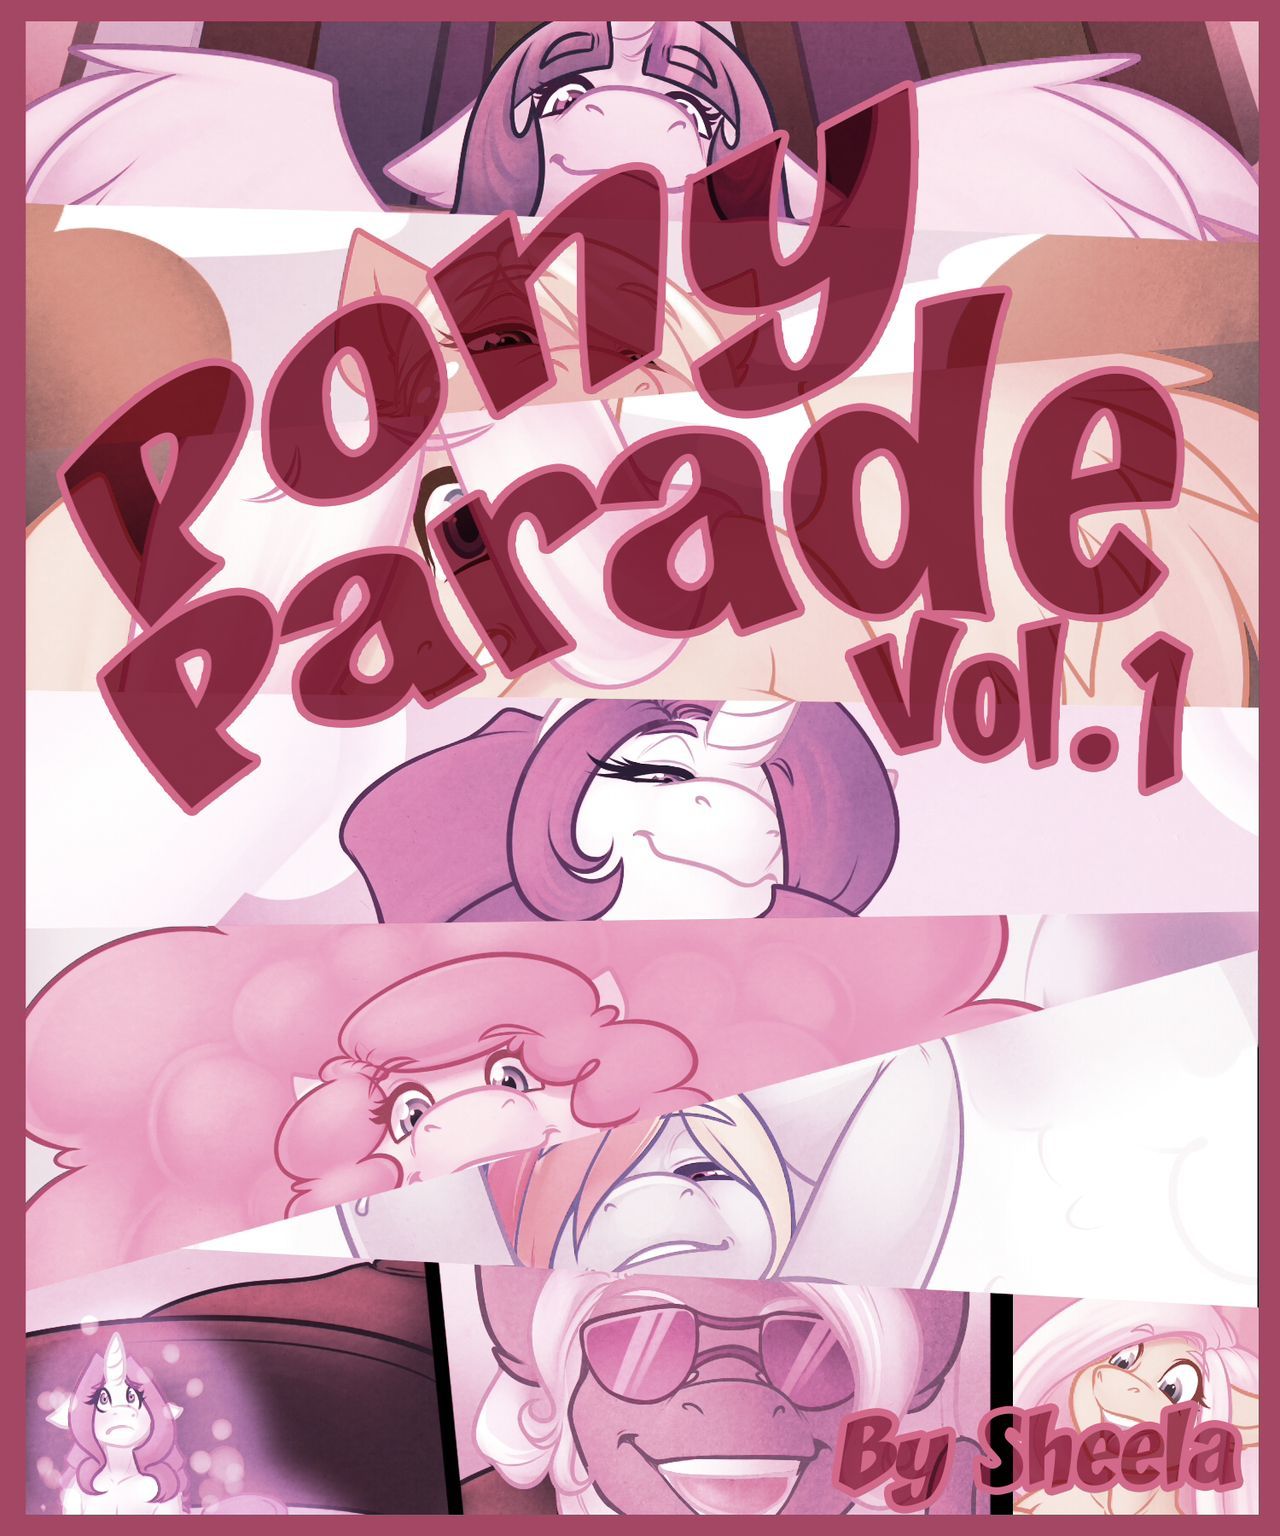 Pony Parade Vol.1 Sheela page 1